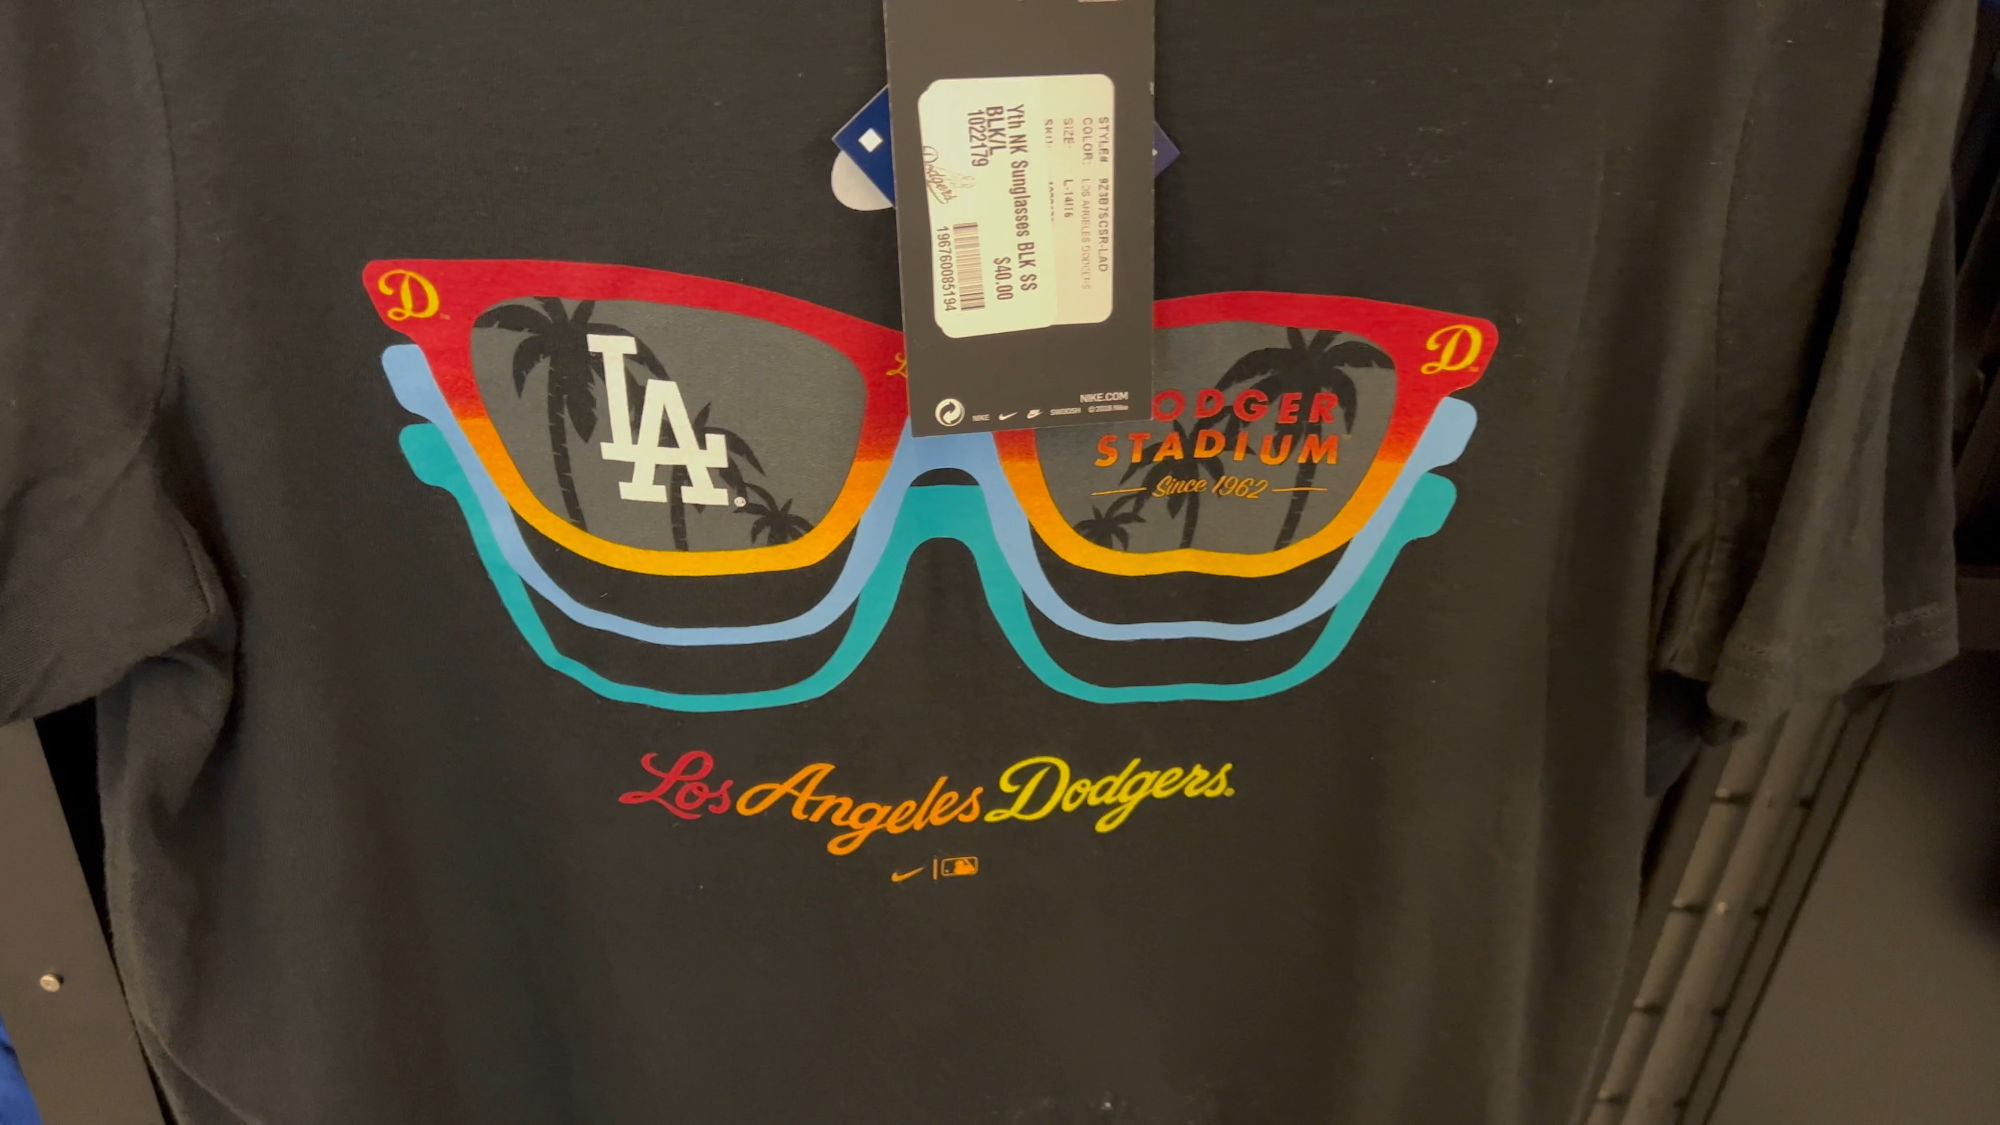 Dodgers Store Stadium T-Shirt